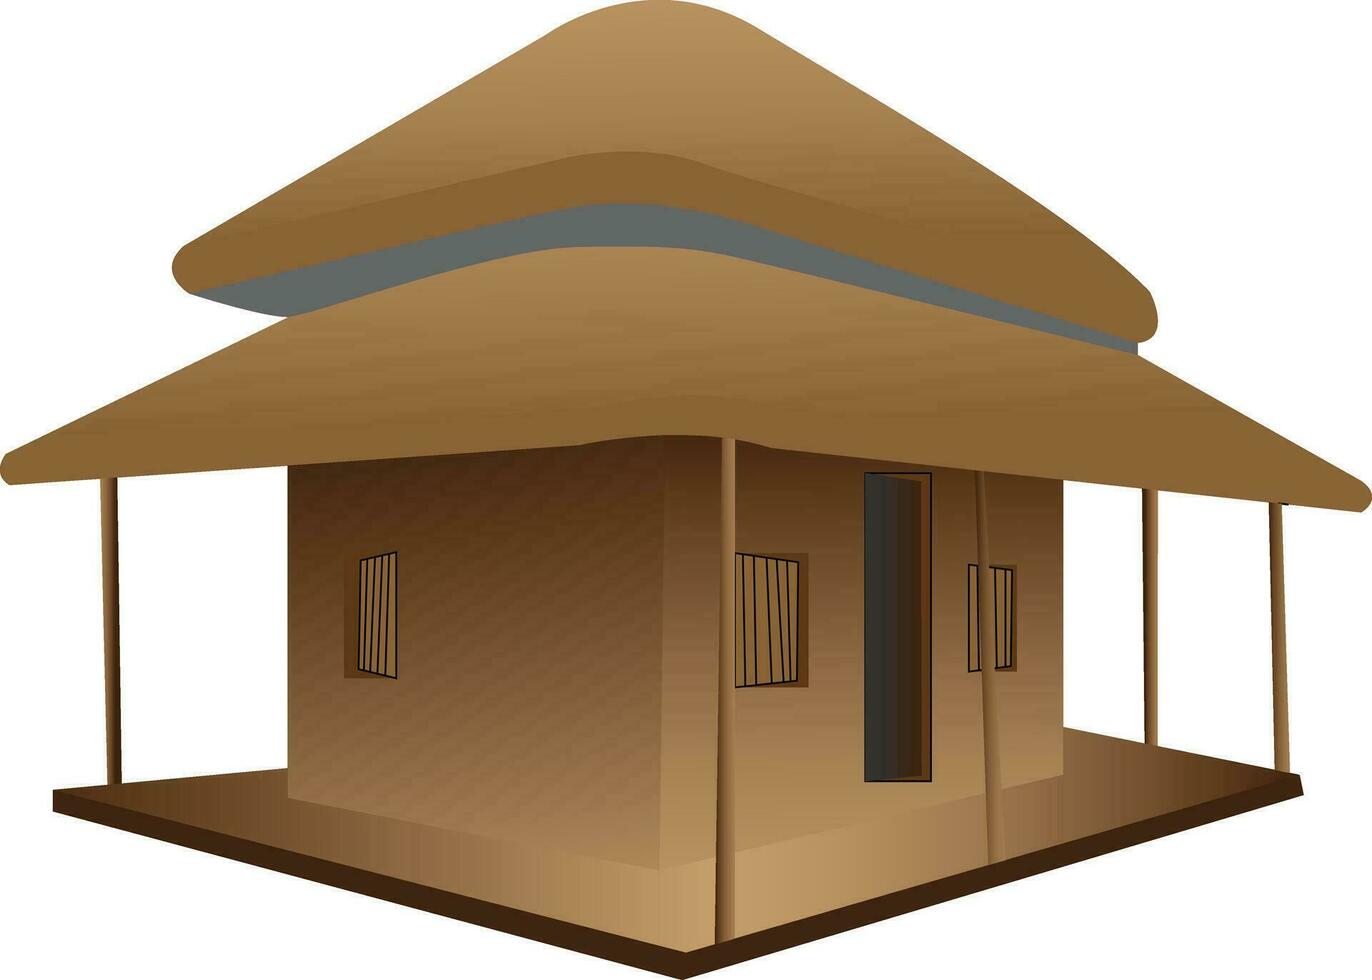 village house design. its a simple house design . vector